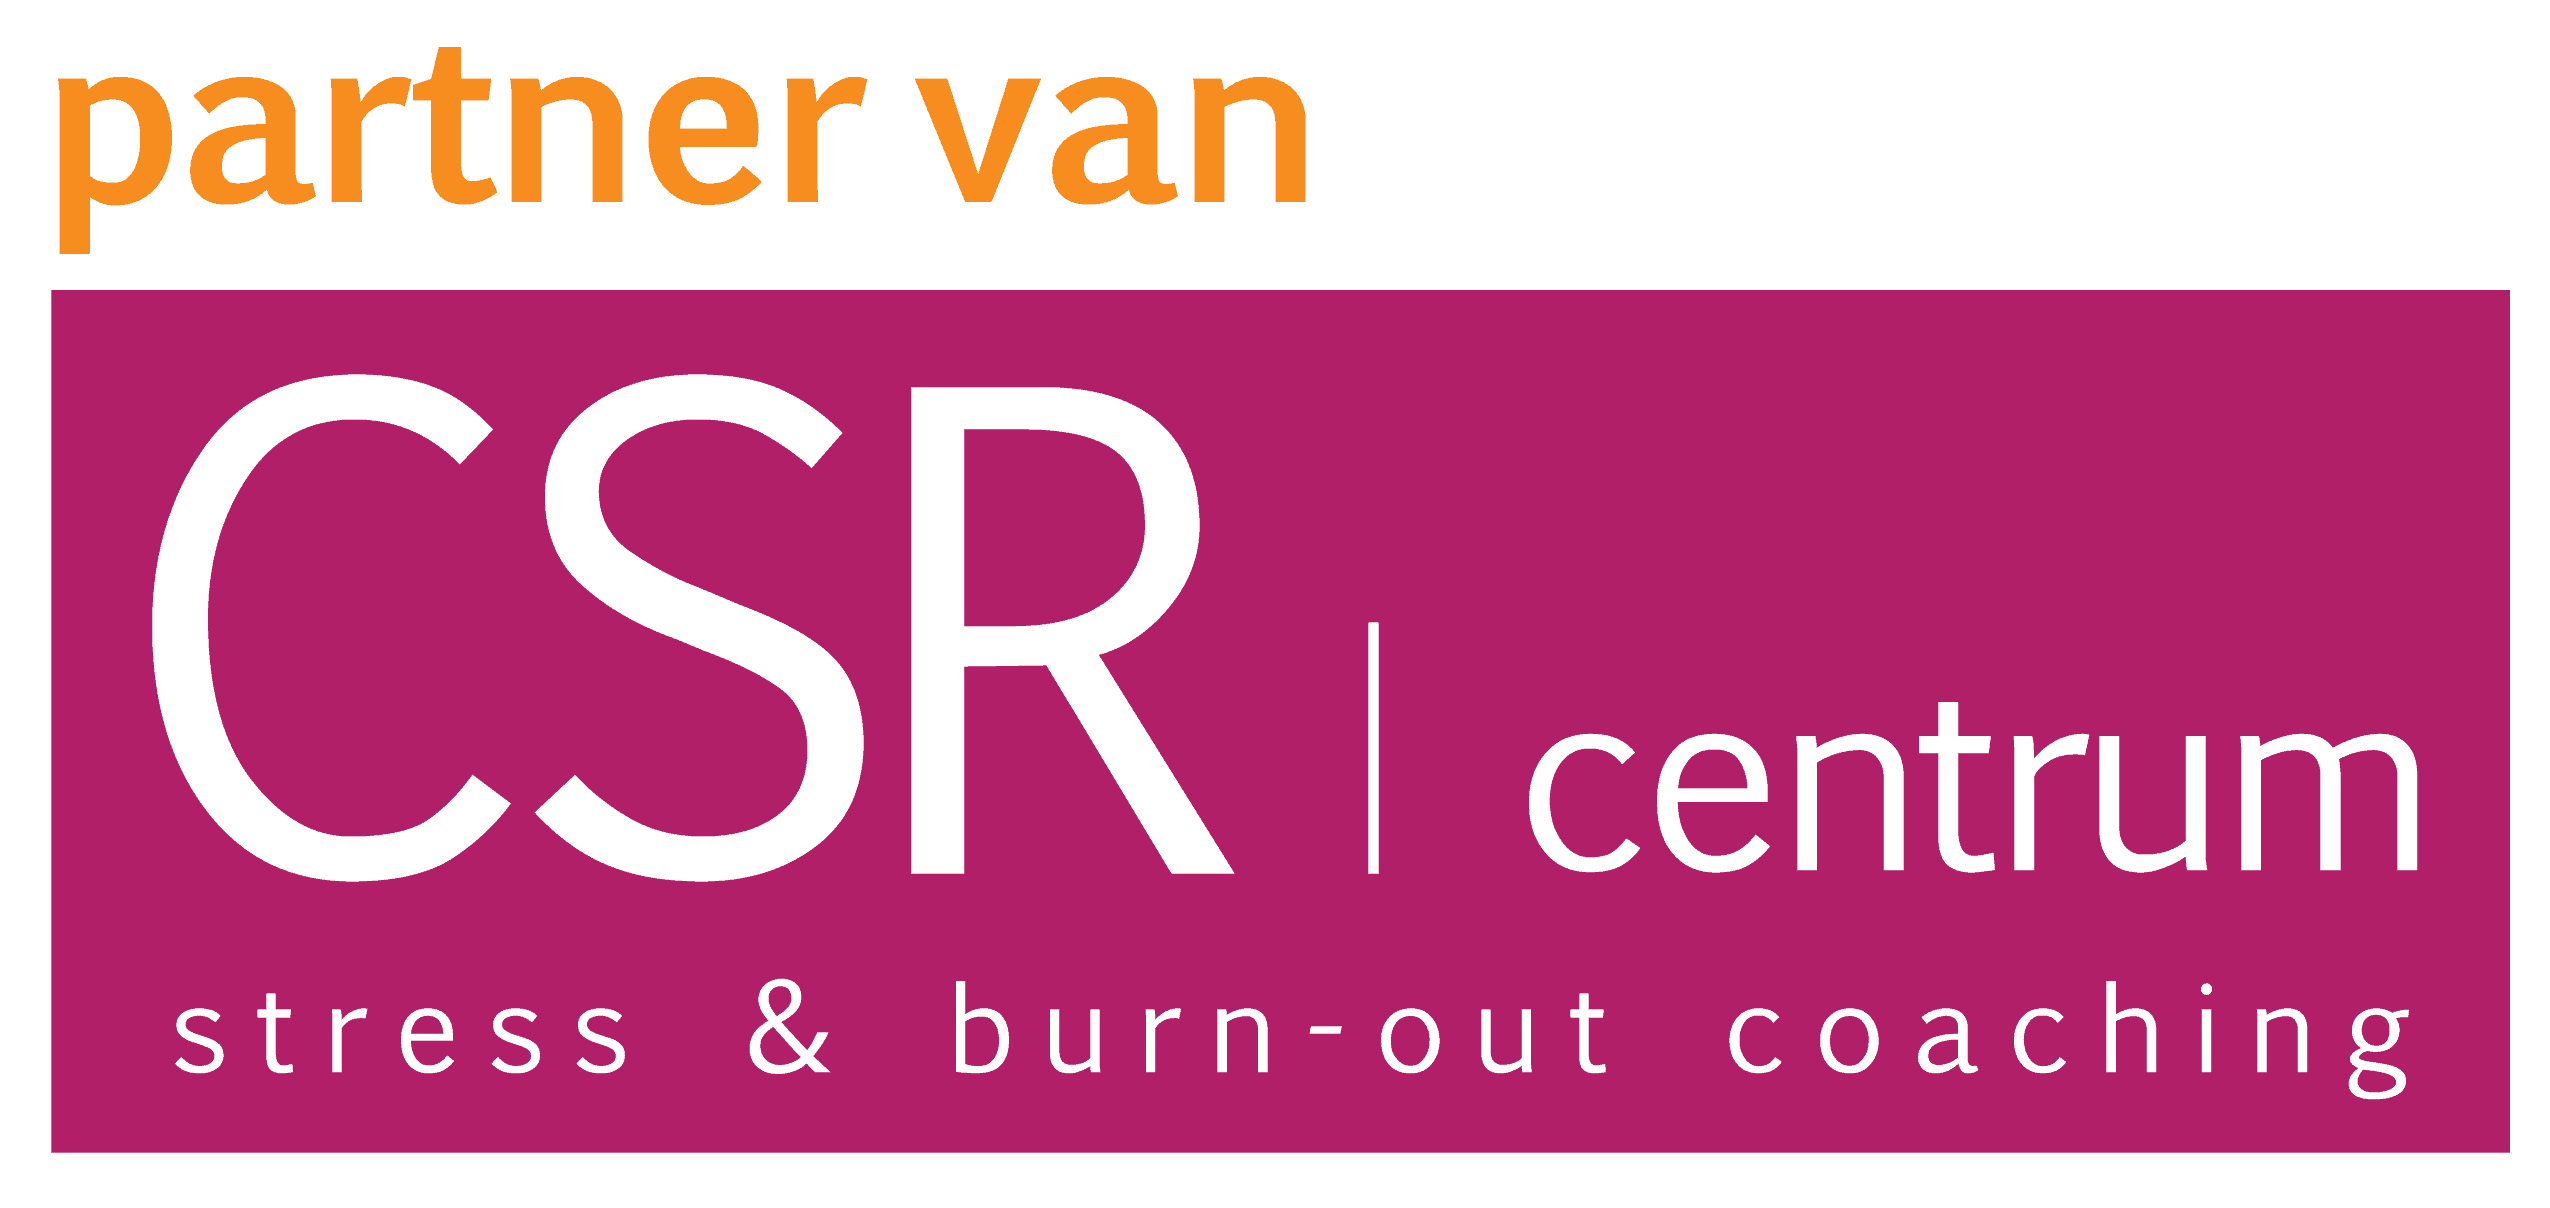 CSR Centrum Stress Burn-out Coaching